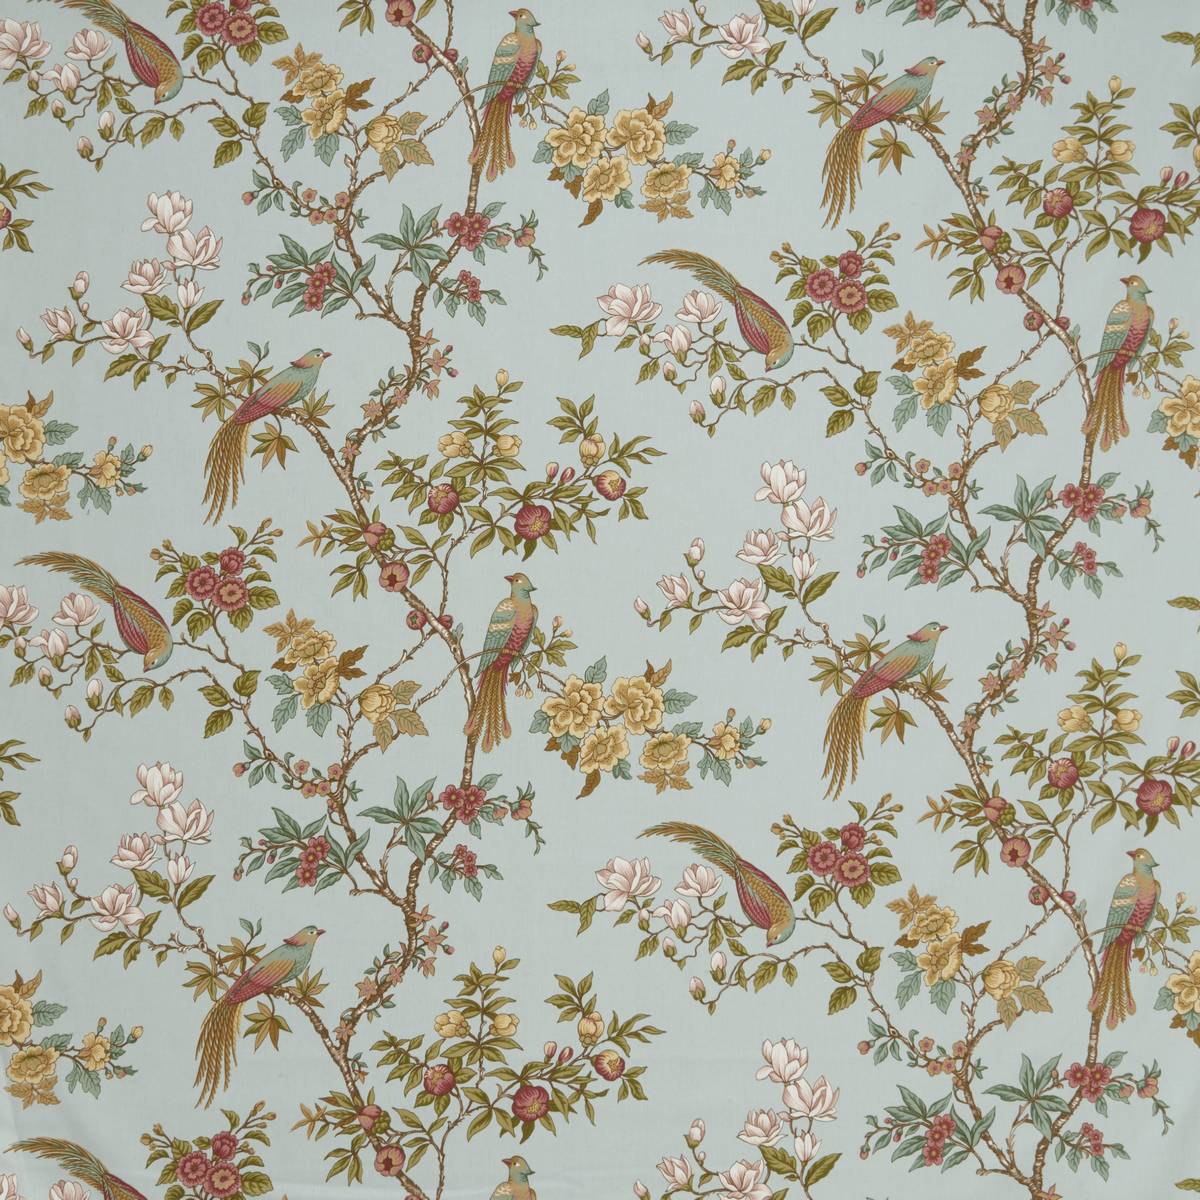 Orientalis Duckegg Fabric by iLiv